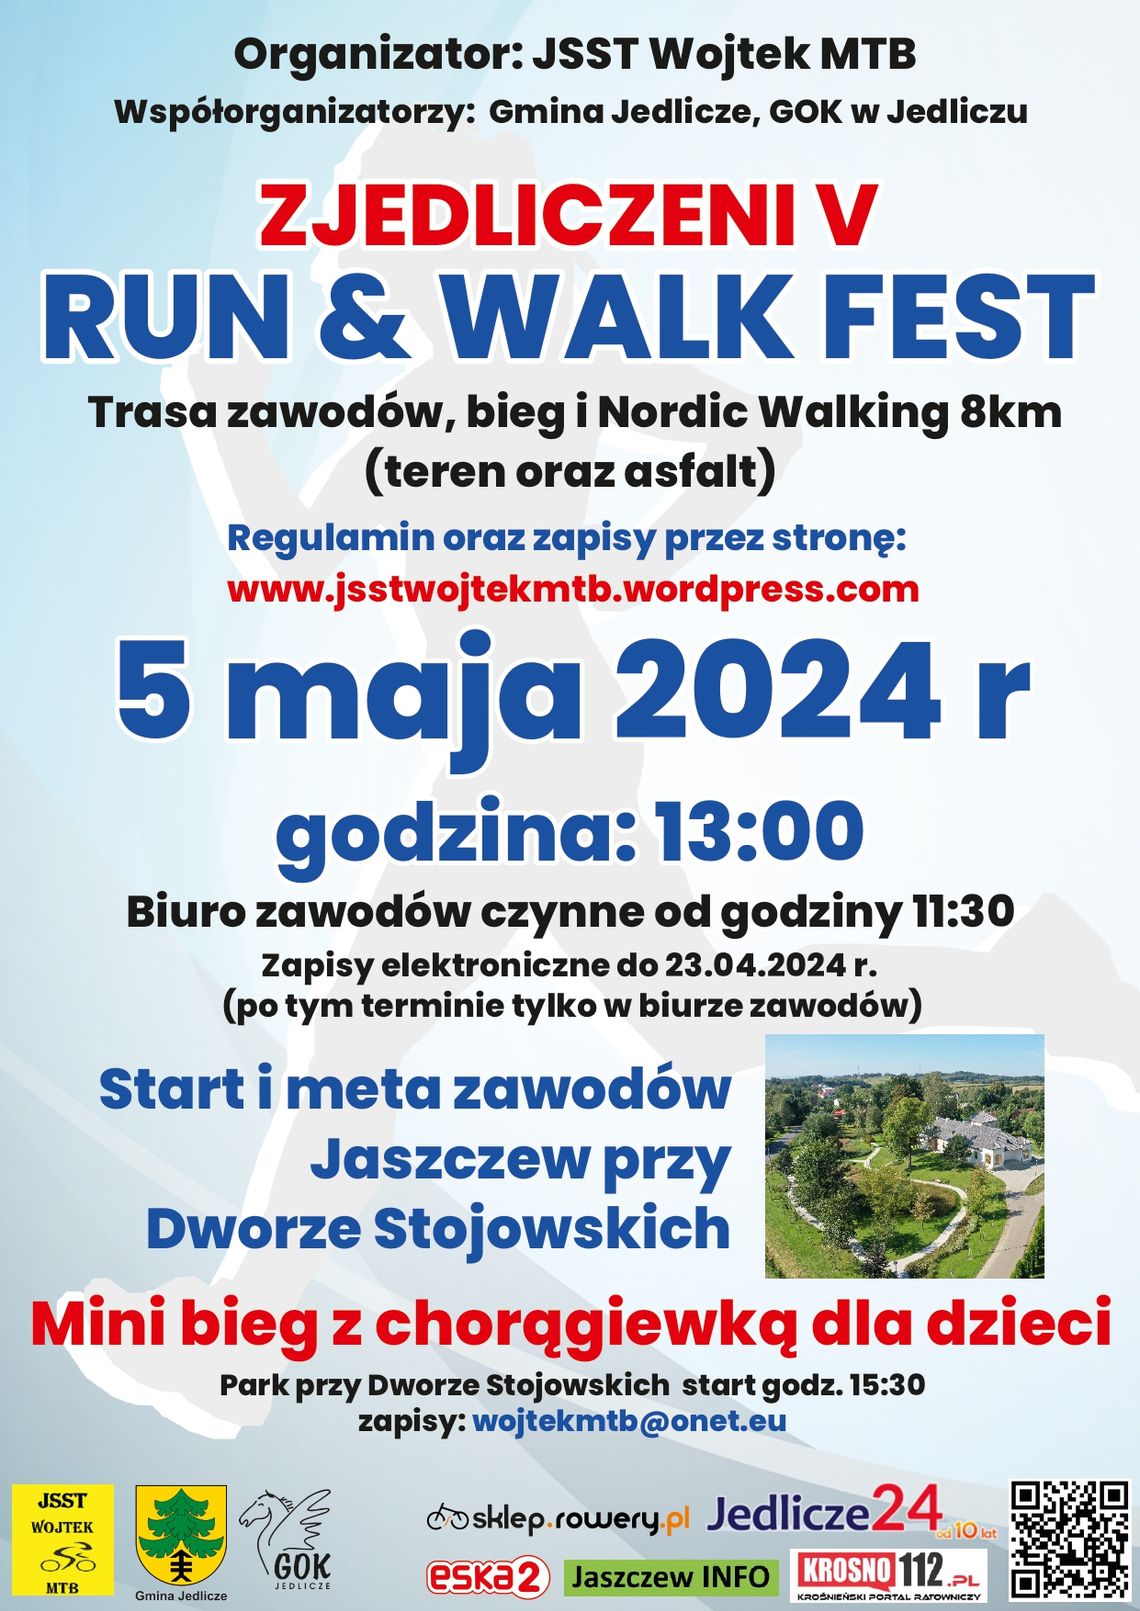 ZJEDLICZENI V "Run & Walk Fest"